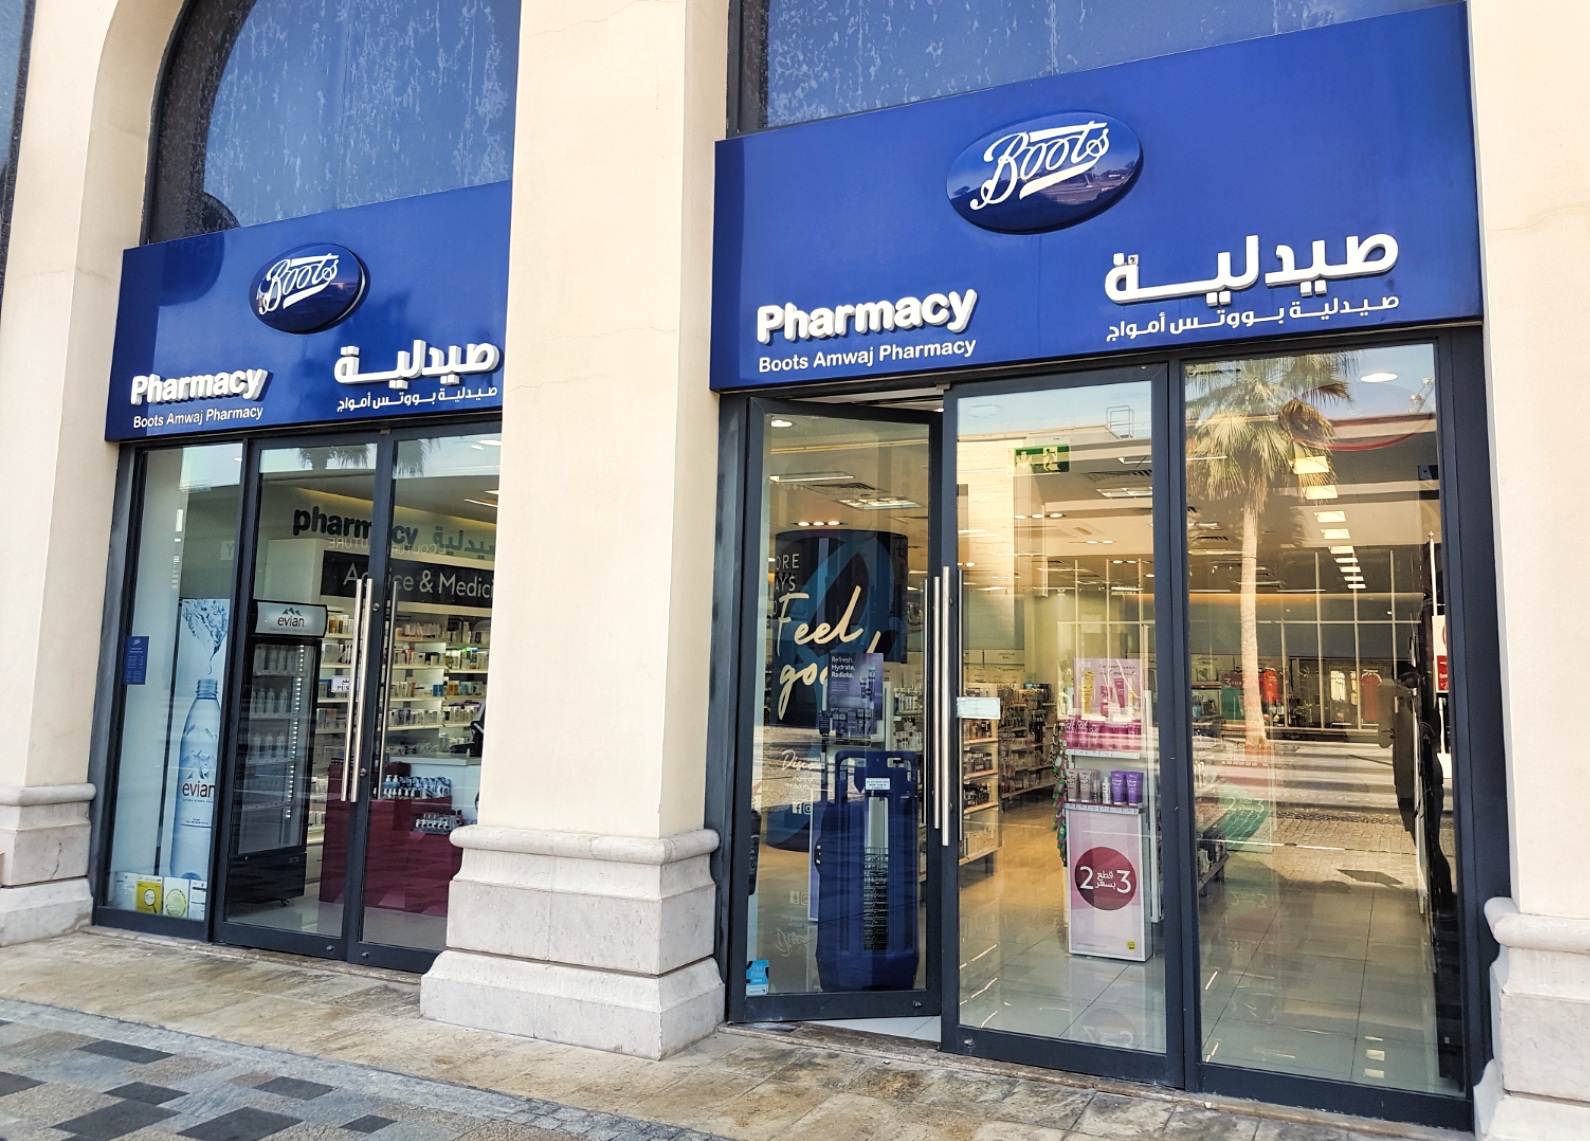 Pharmacies in Dubai - Boots Pharmacy